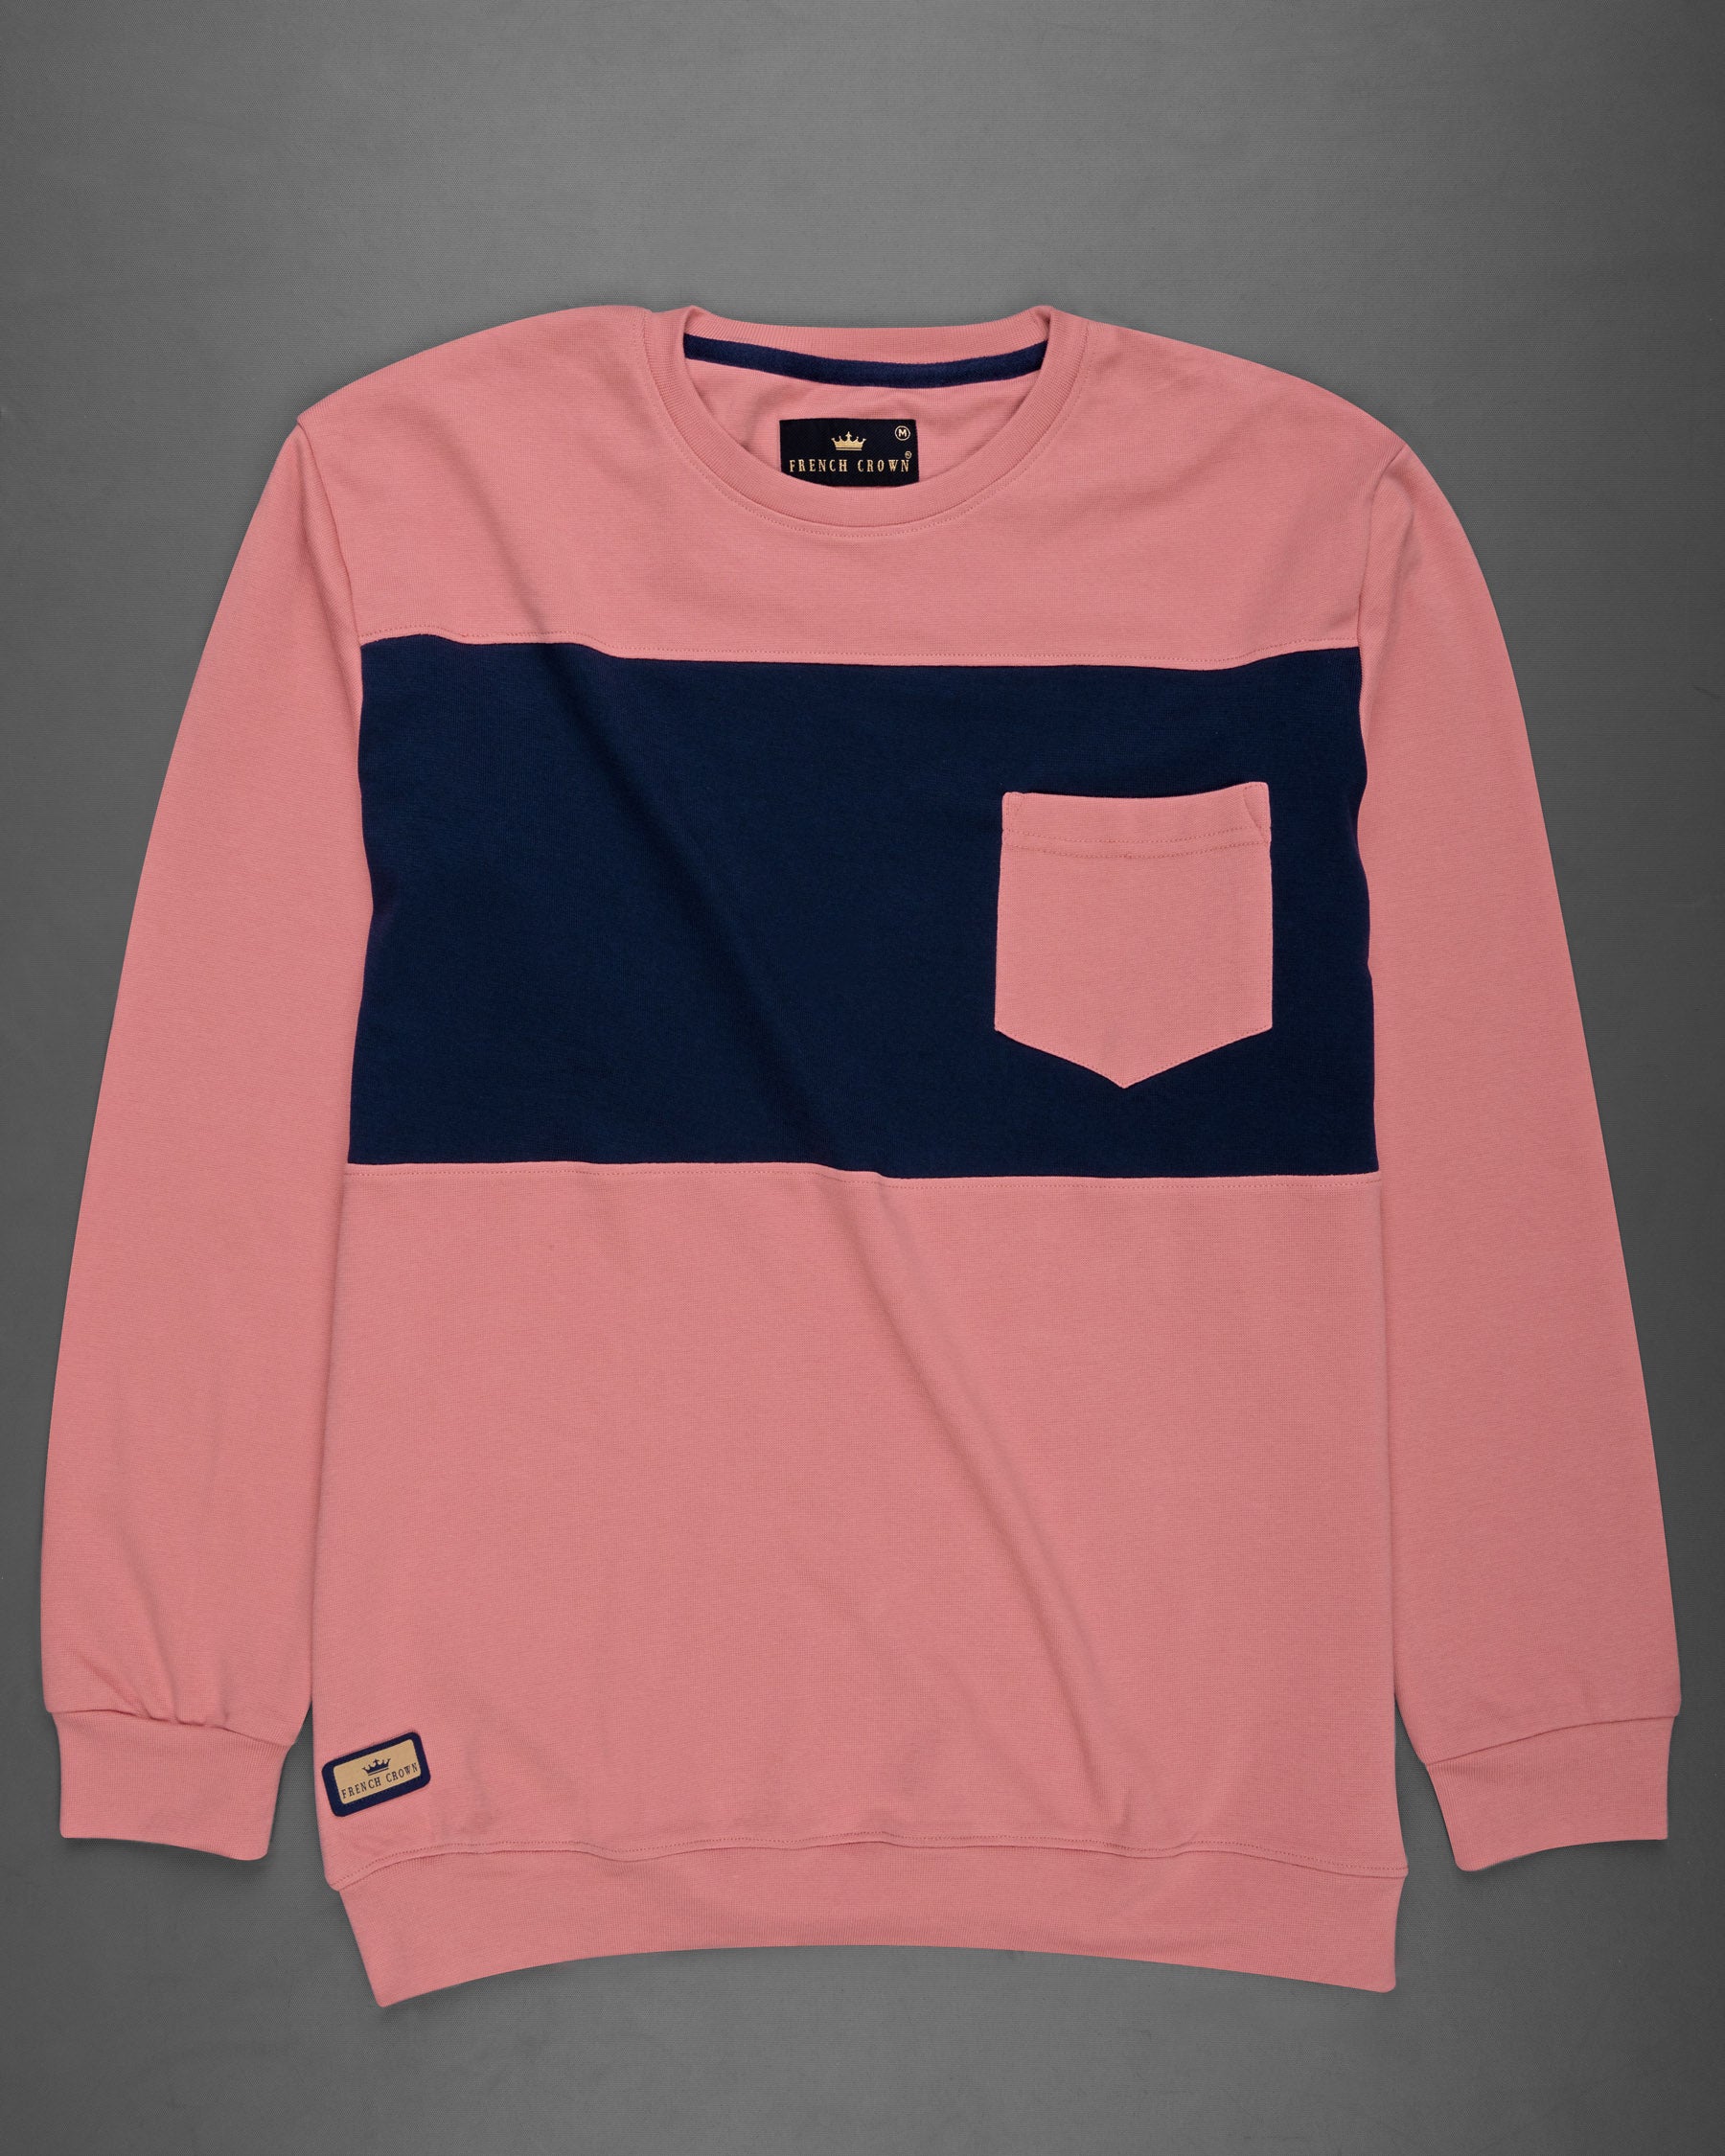 Wewak Pink Dobby Textured Pique Sweatshirt TS520-S, TS520-M, TS520-L, TS520-XL, TS520-XXL